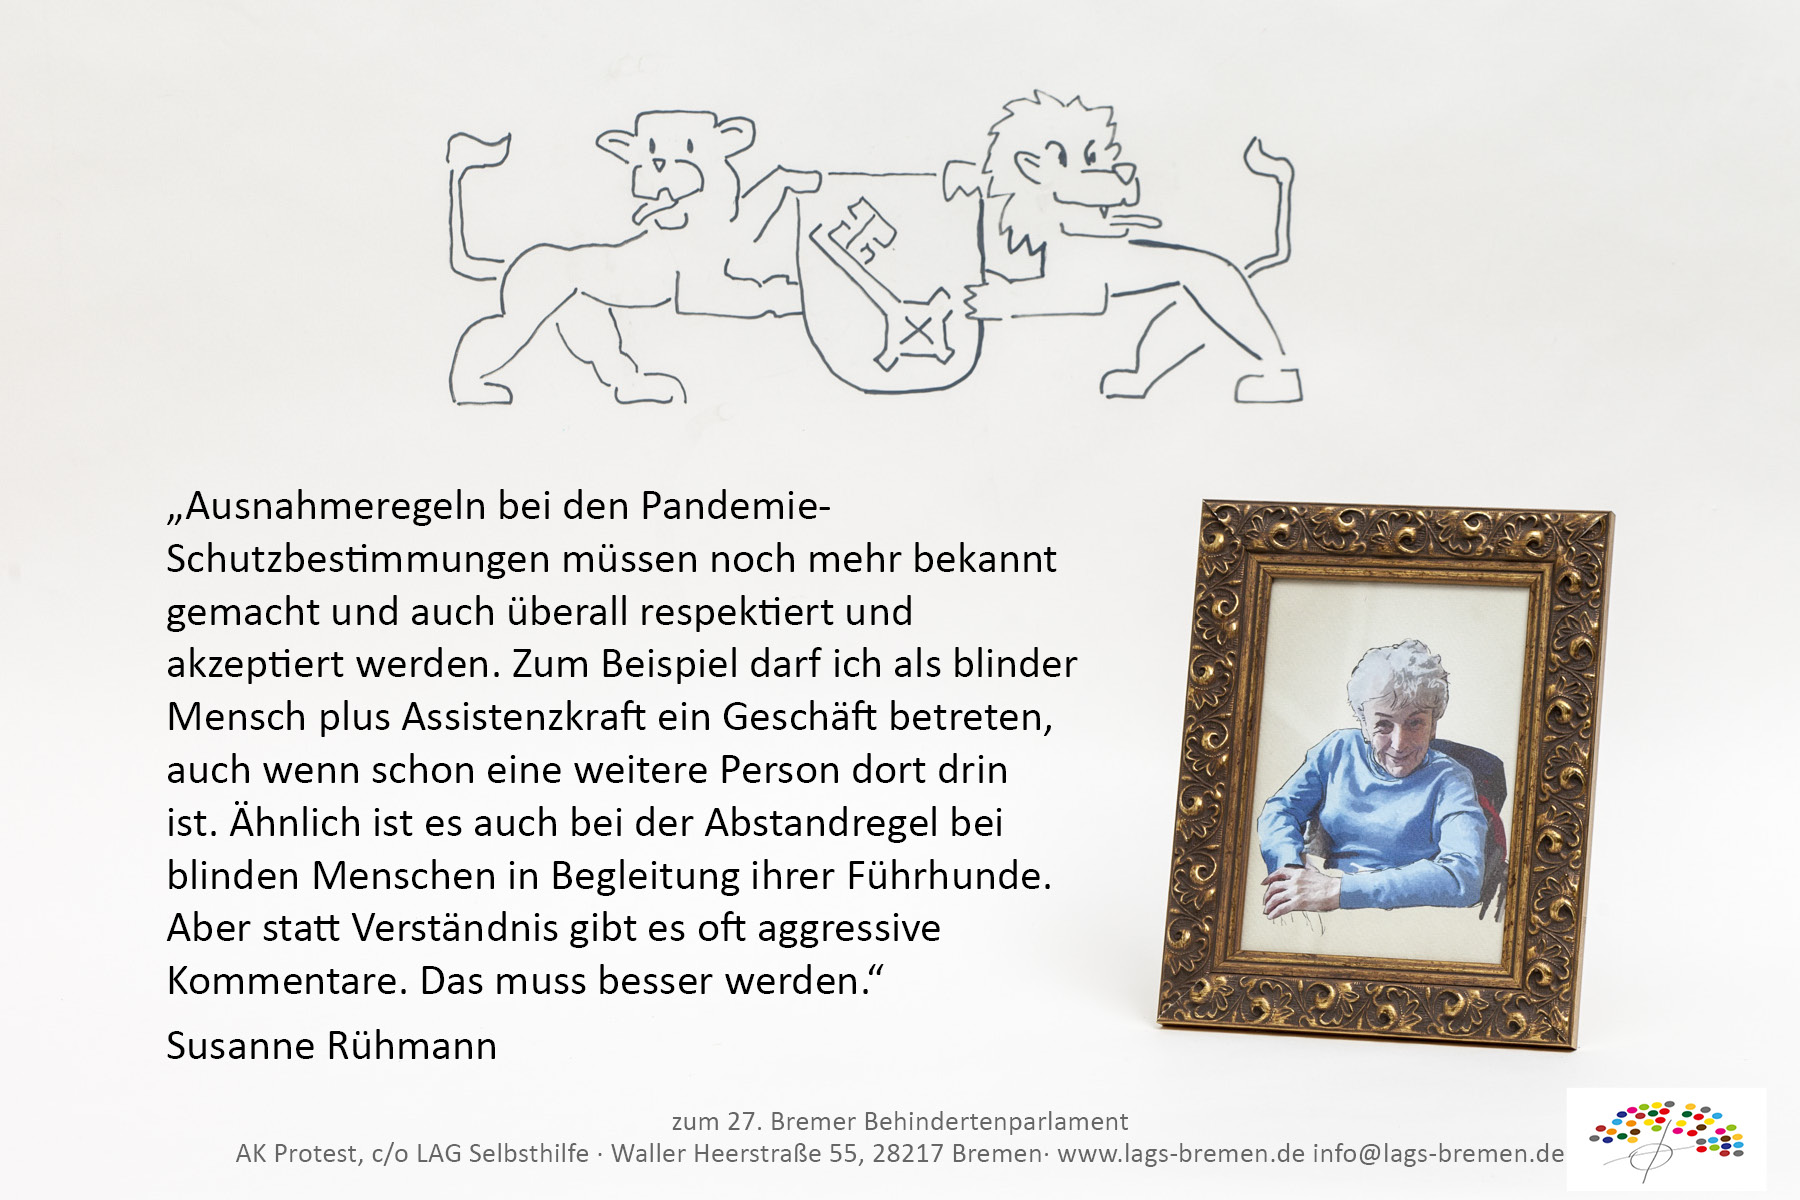 Susanne Rühmann: Ausnahmeregeln bekannter machen.